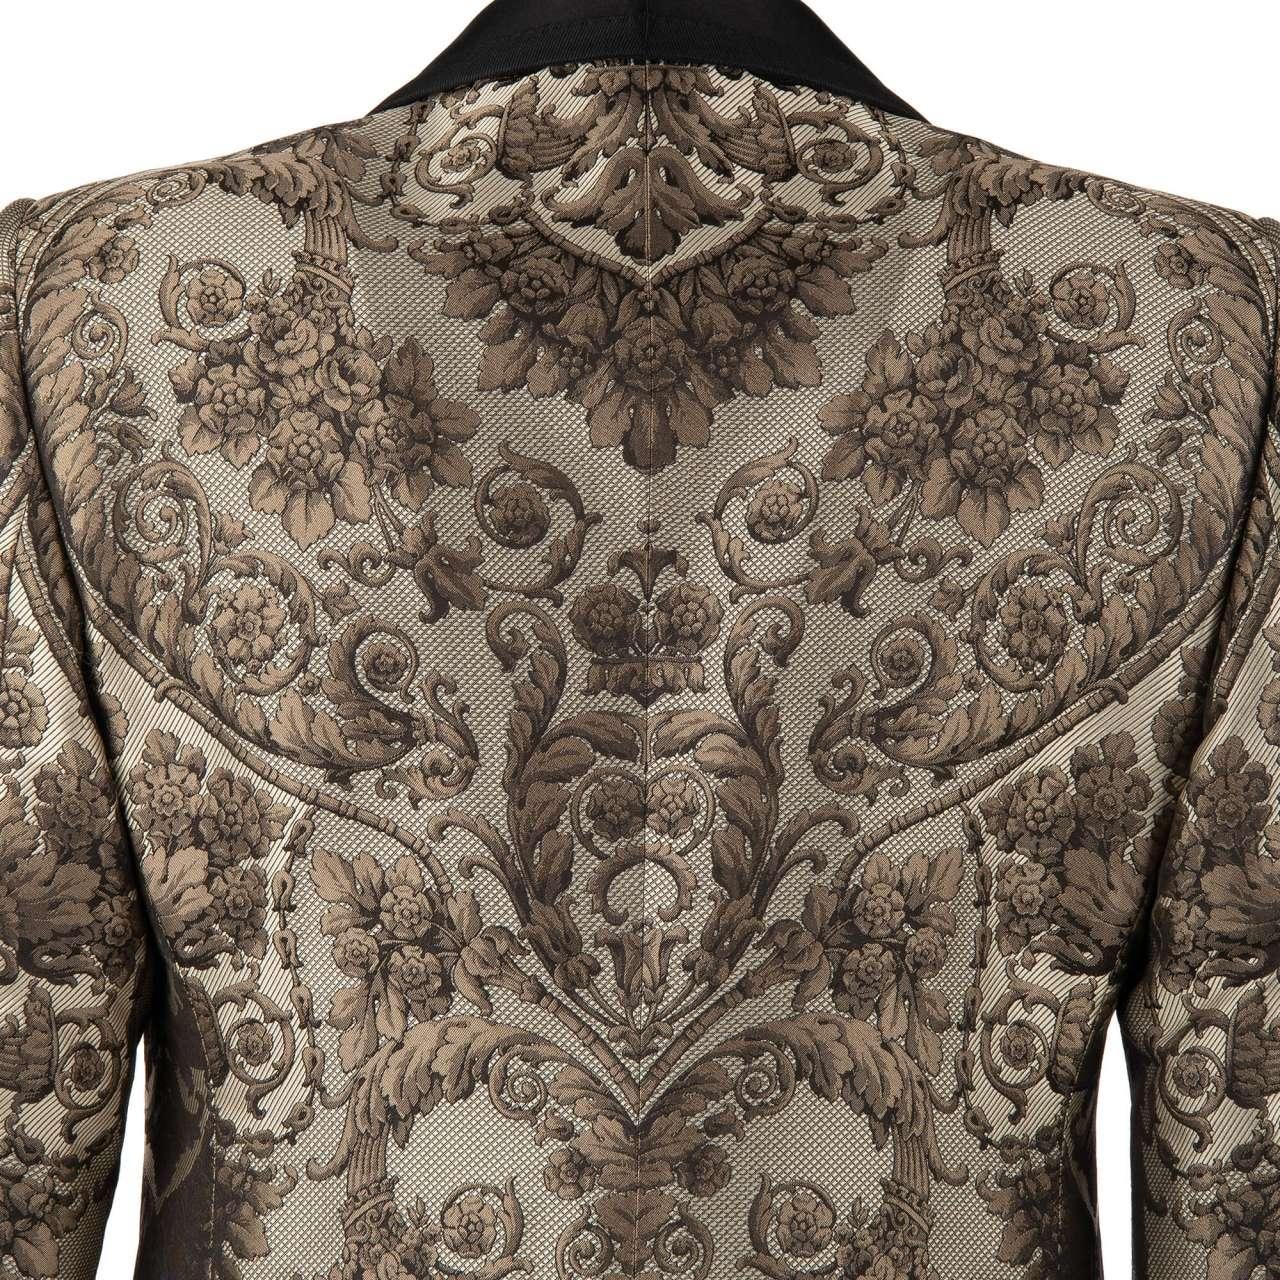 Dolce & Gabbana Baroque Jacquard Blazer with Waistcoat Black Beige 50 US 40 M L In Excellent Condition For Sale In Erkrath, DE